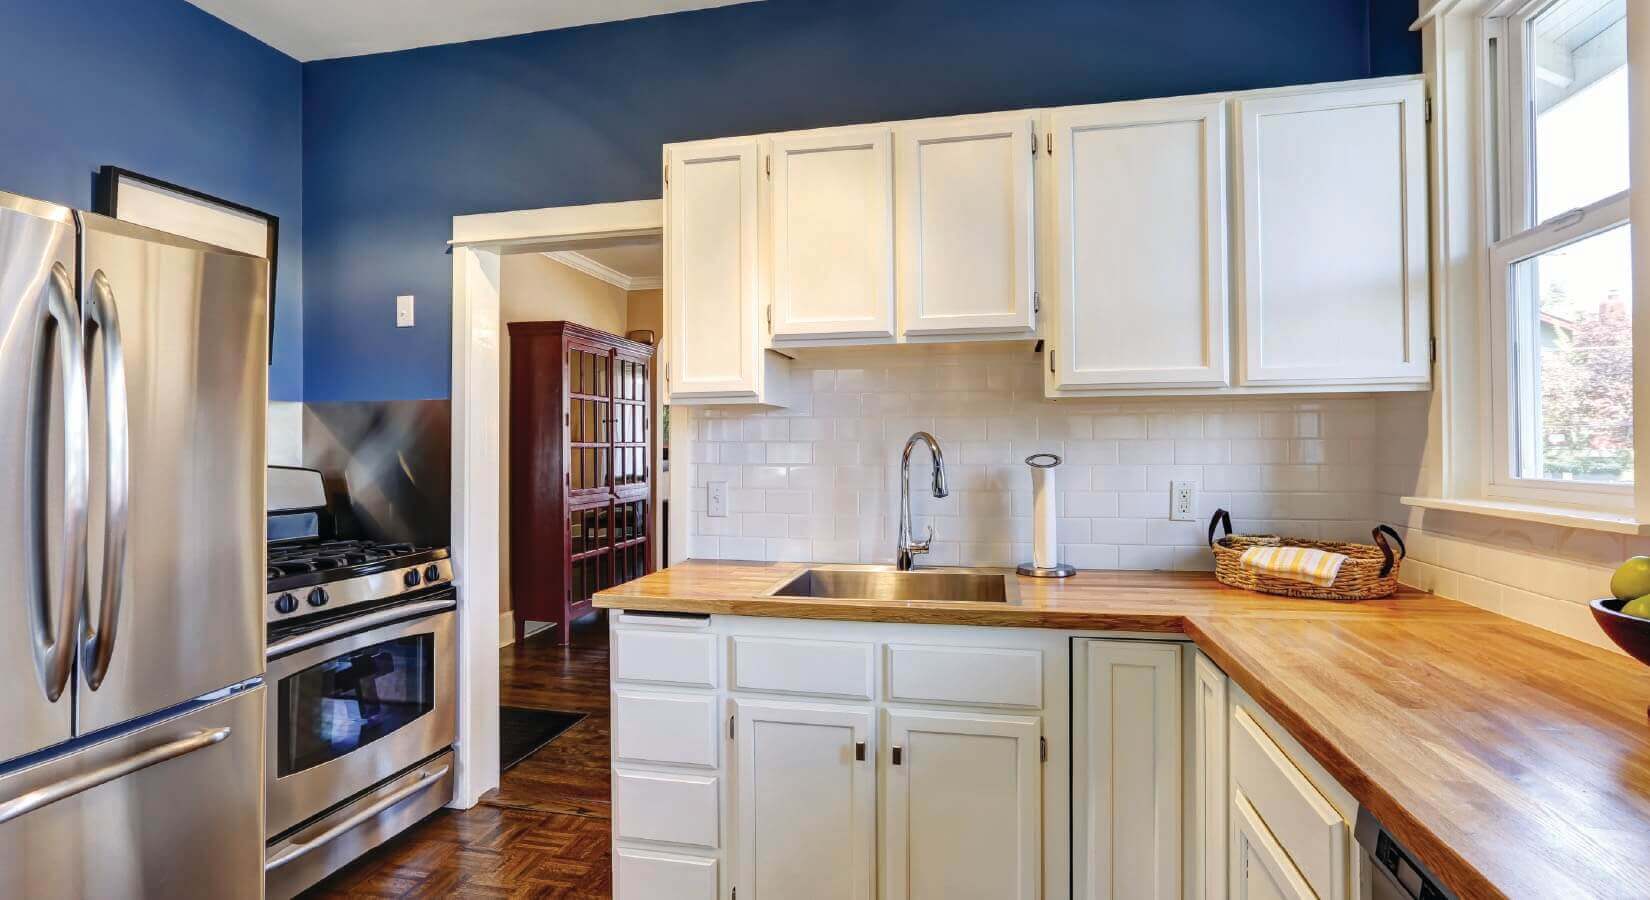 wall blue kitchen ideas